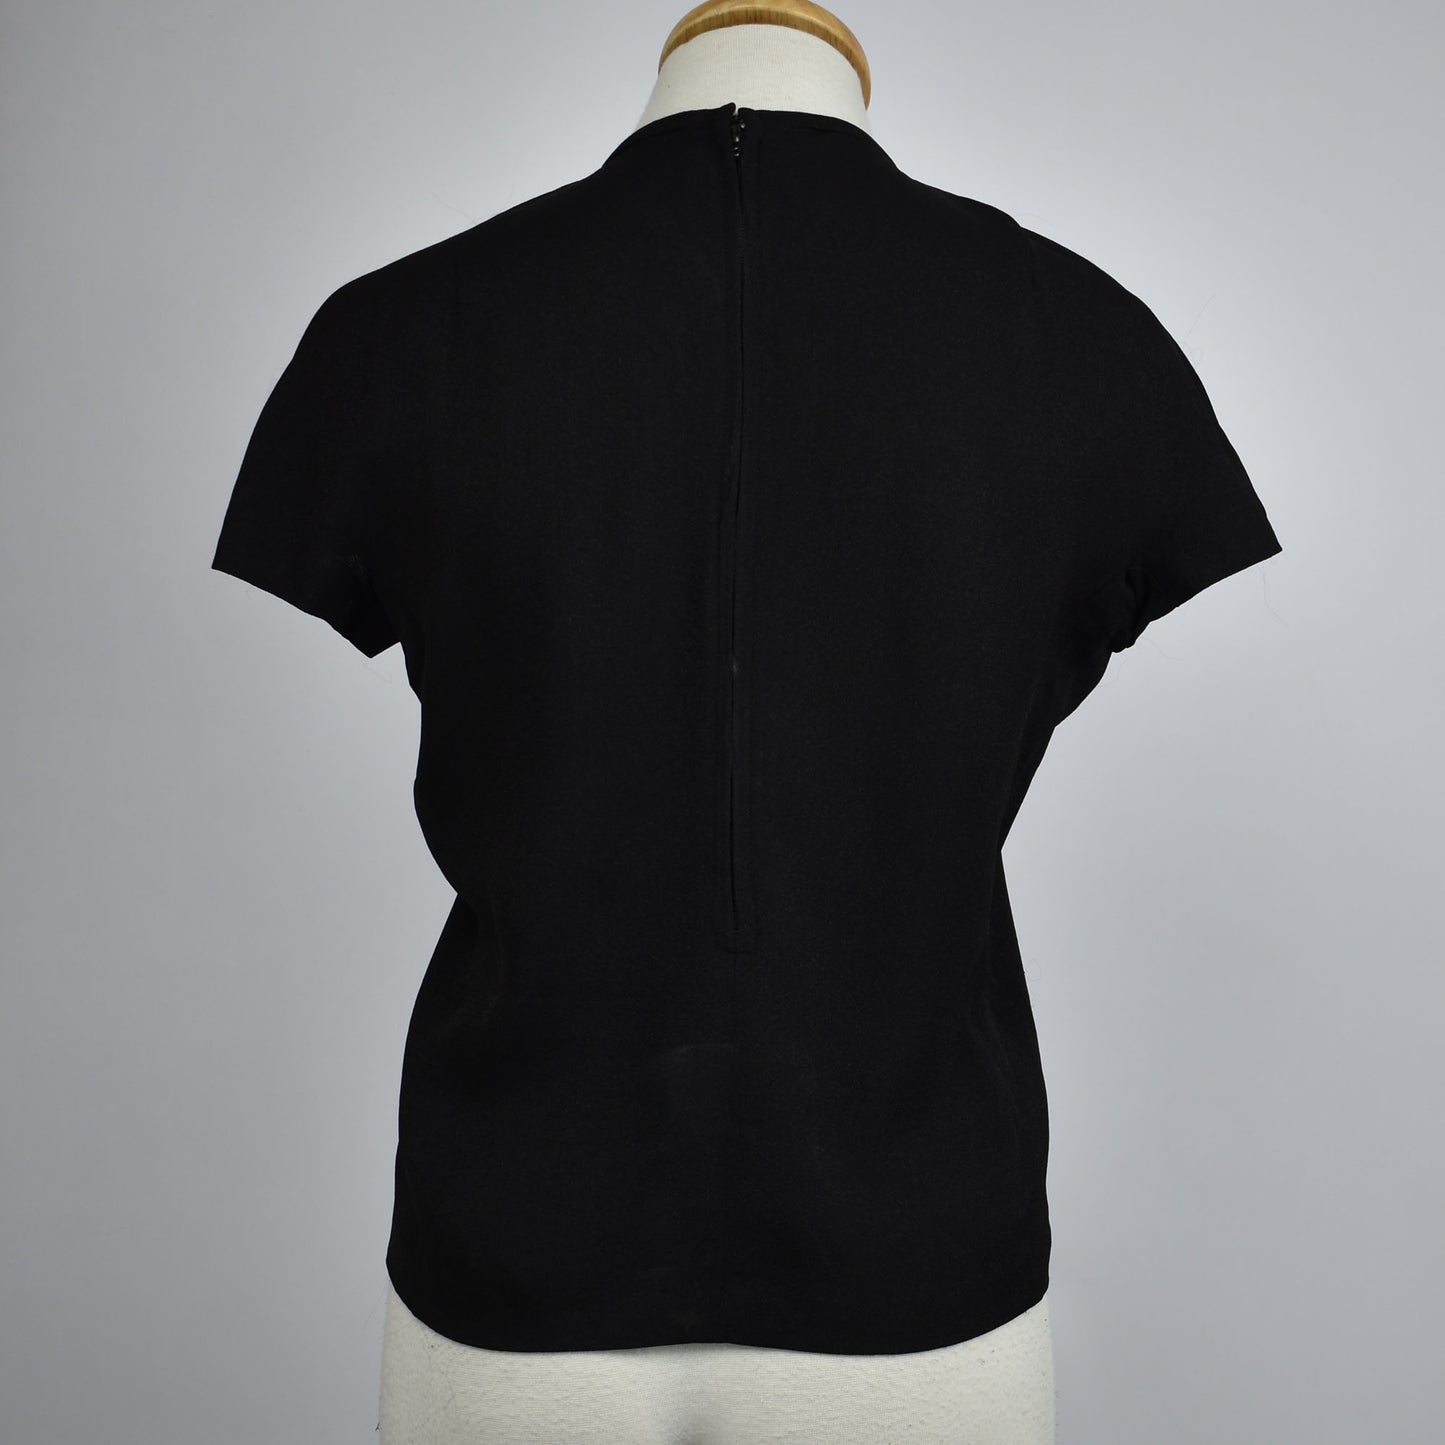 Vintage 50s Semi Sheer Black Blouse with Subtle Sparkles, Cap Sleeves, Jewel Neckline with 3/4 Back Talon Zipper